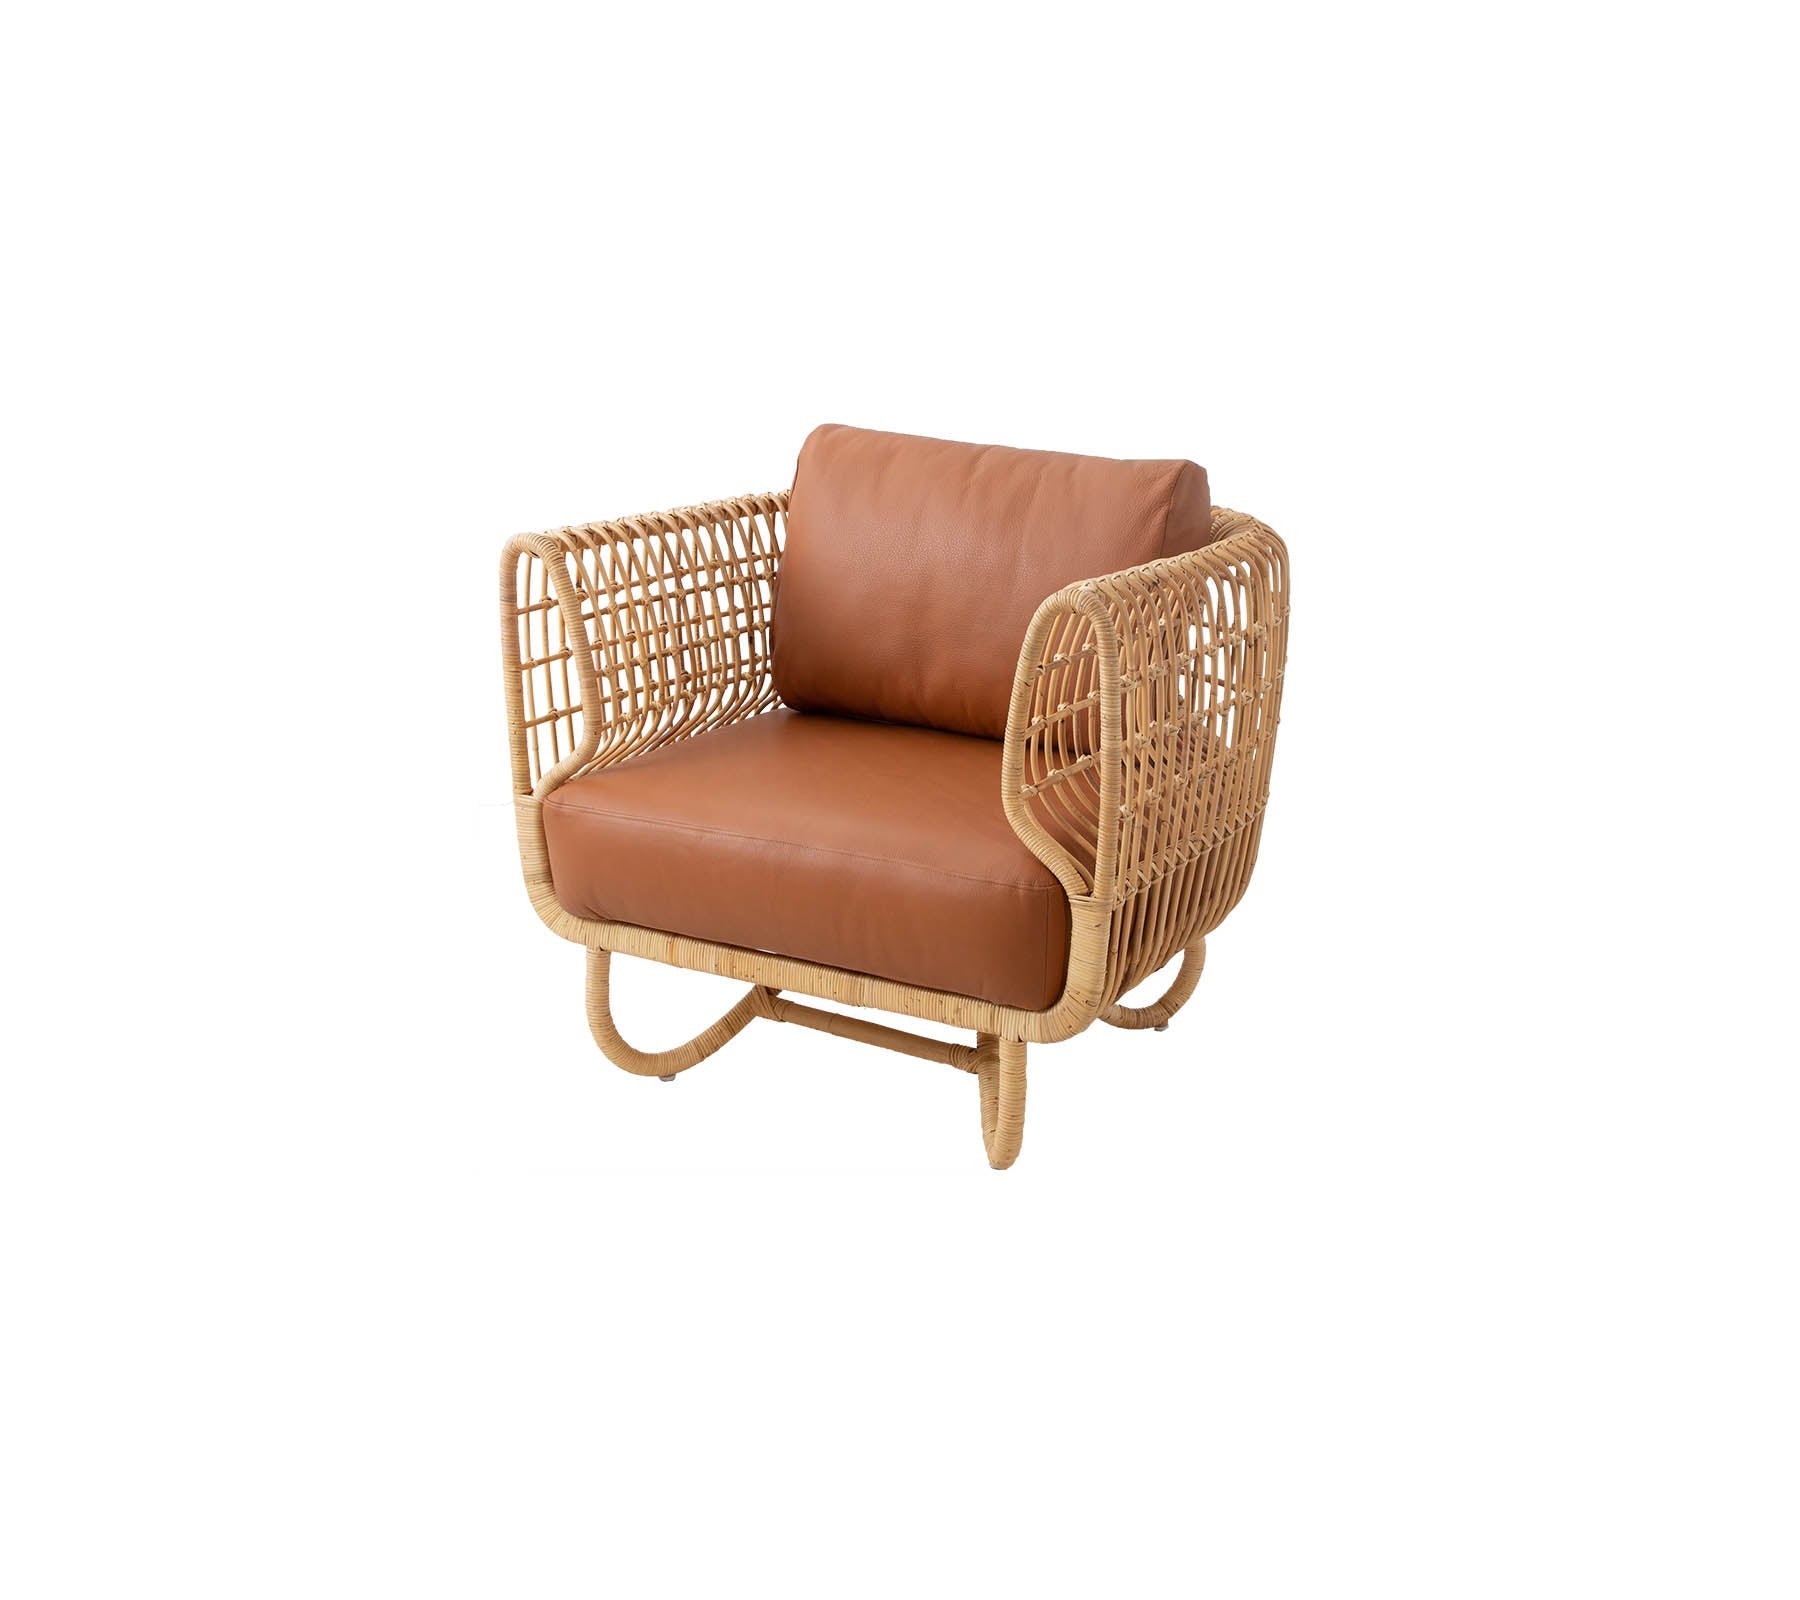 Cane-line Nest Lounge Chair 74211RU